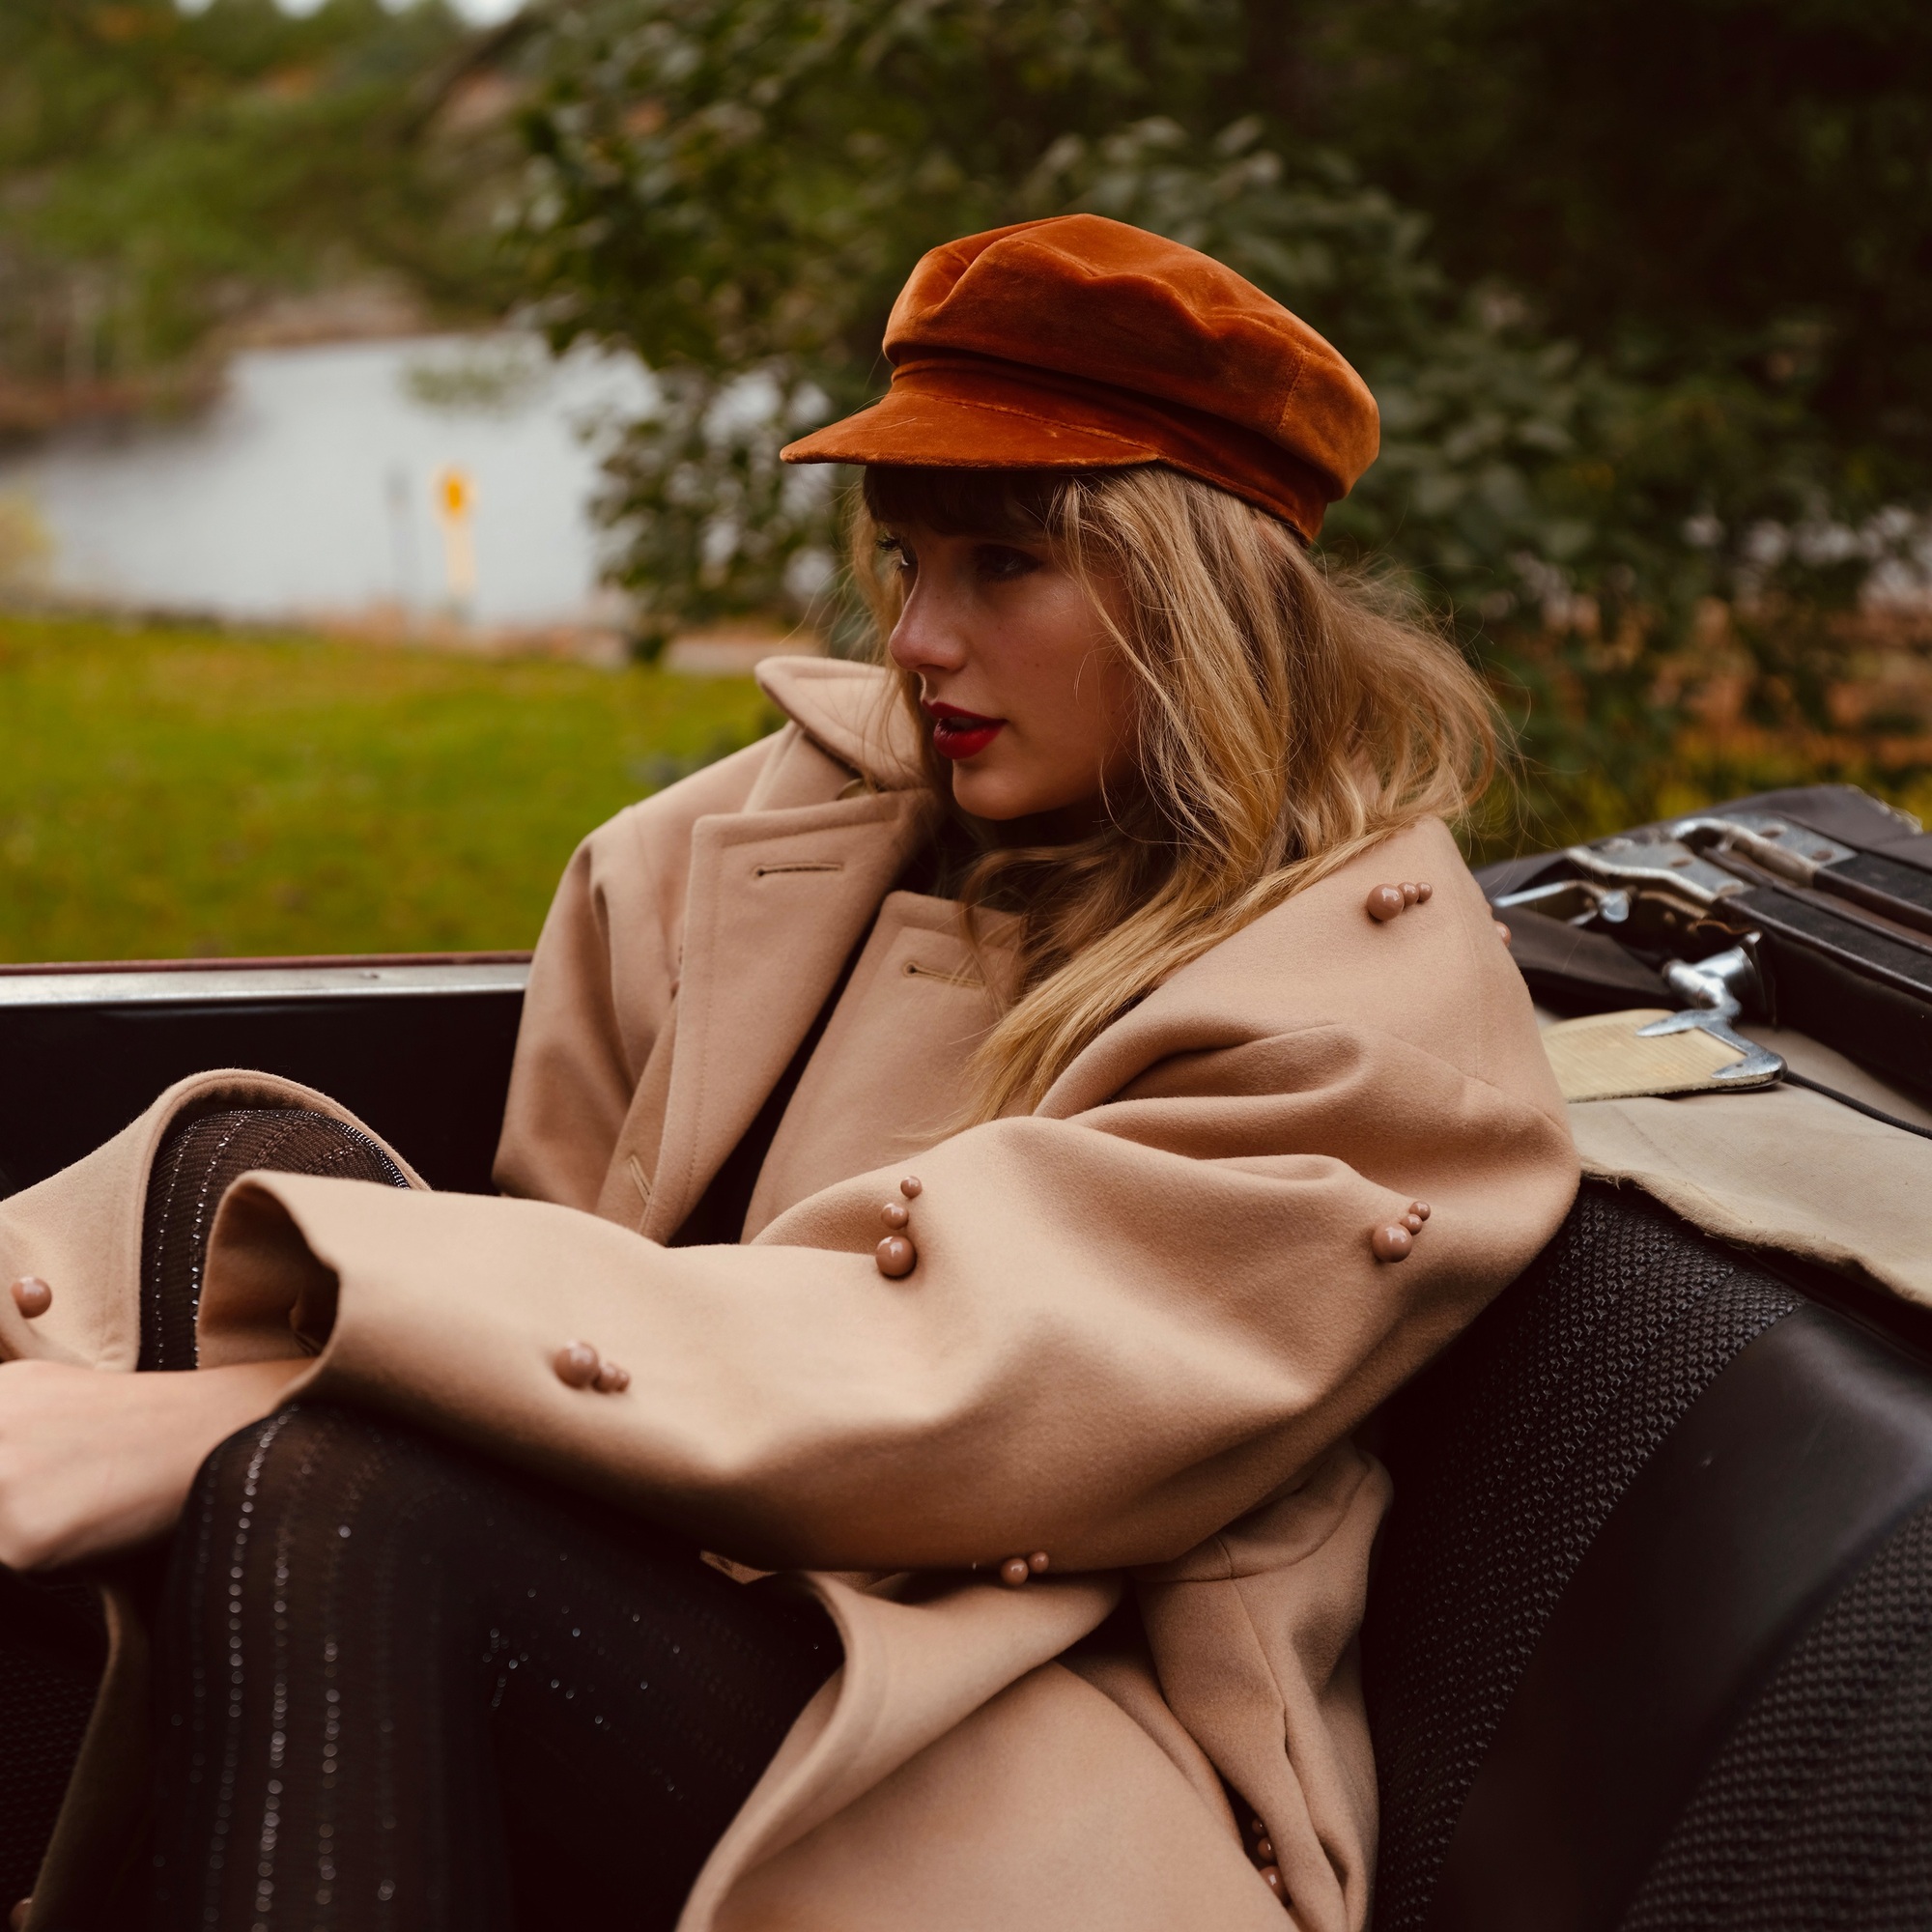 People 2000x2000 Taylor Swift women singer blonde blue eyes long hair women outdoors hat coats convertible